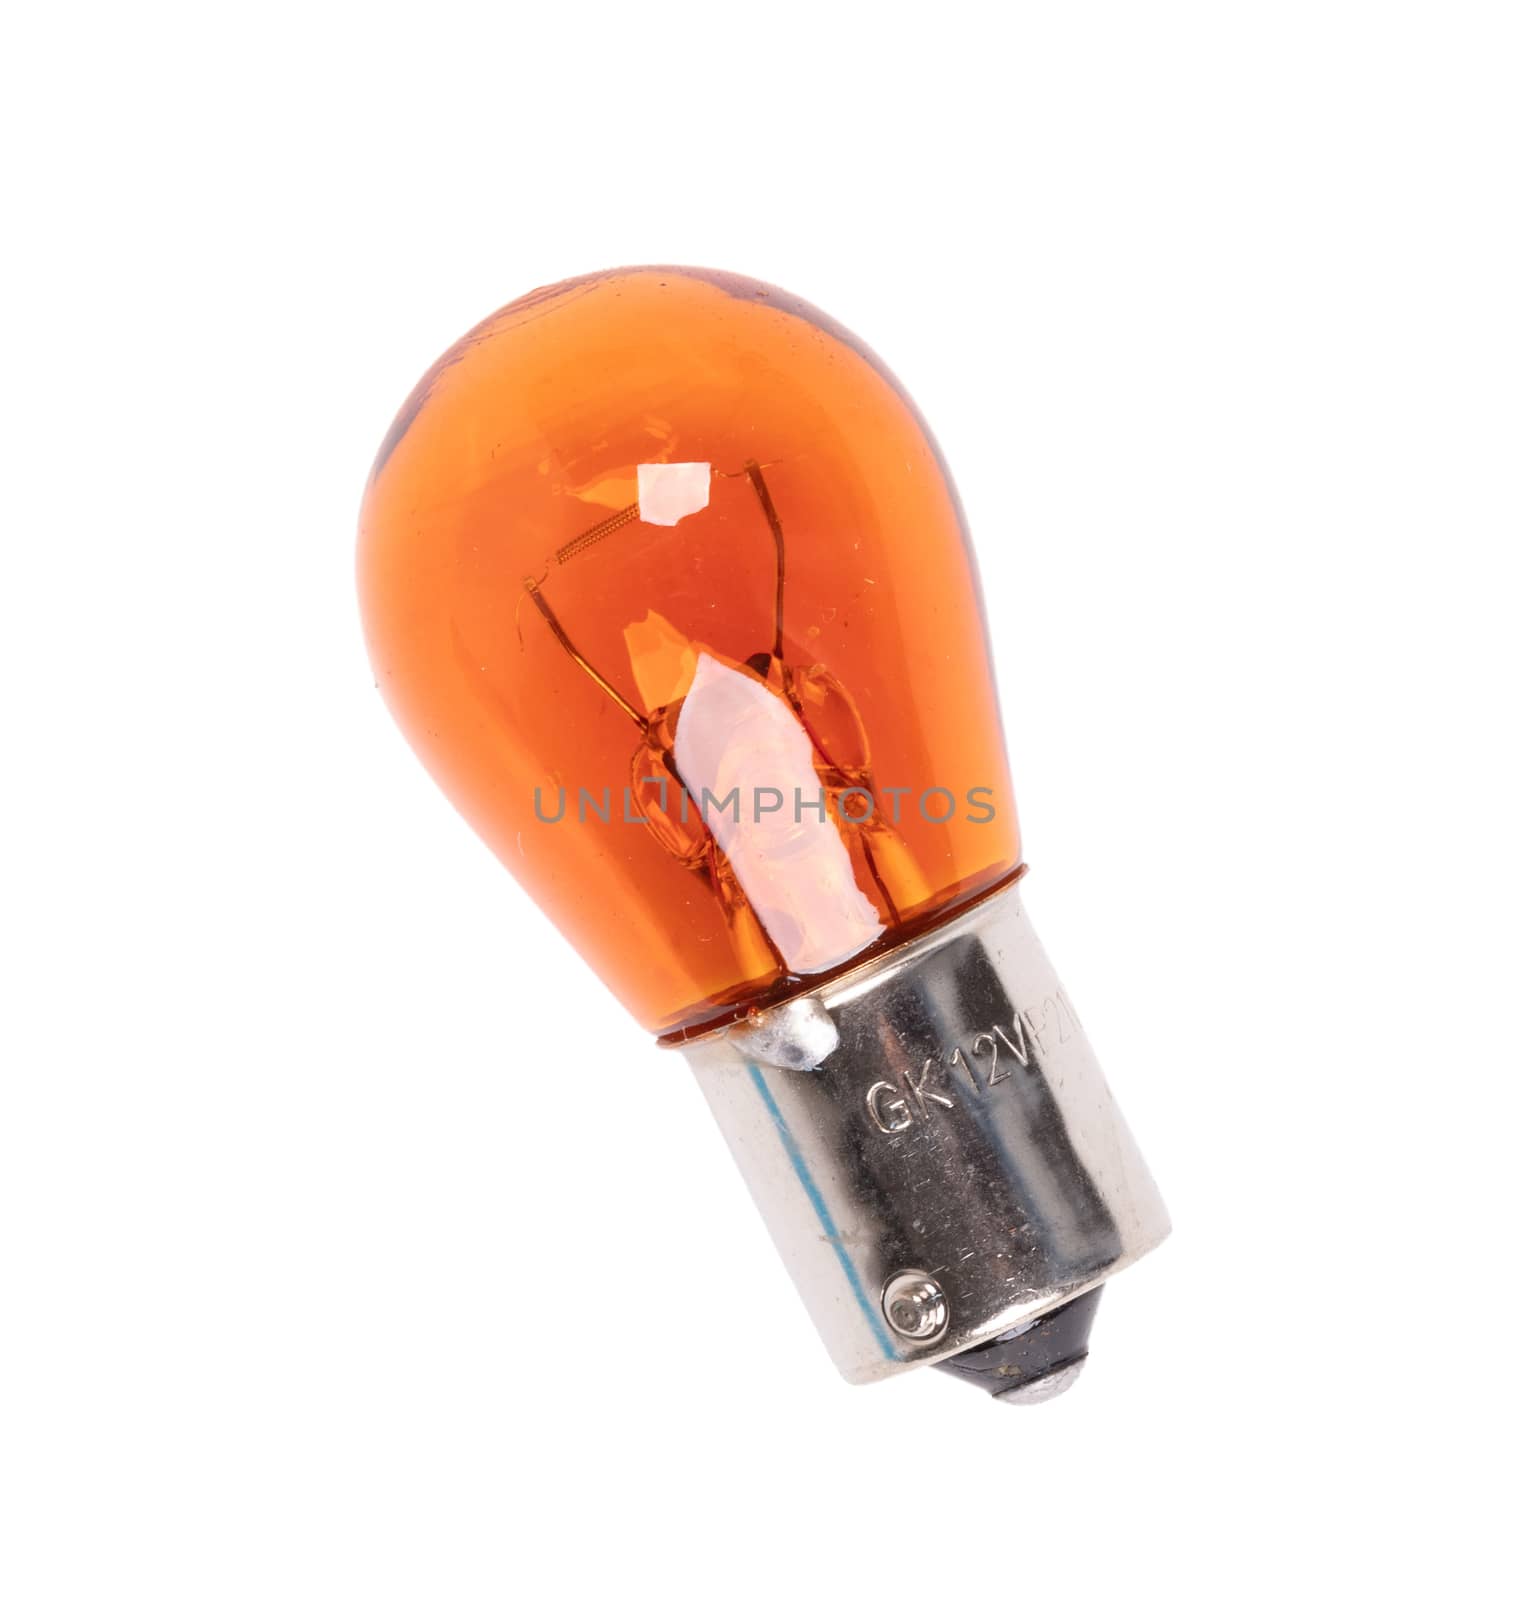 Orange bulb for car headlight, isolated on white